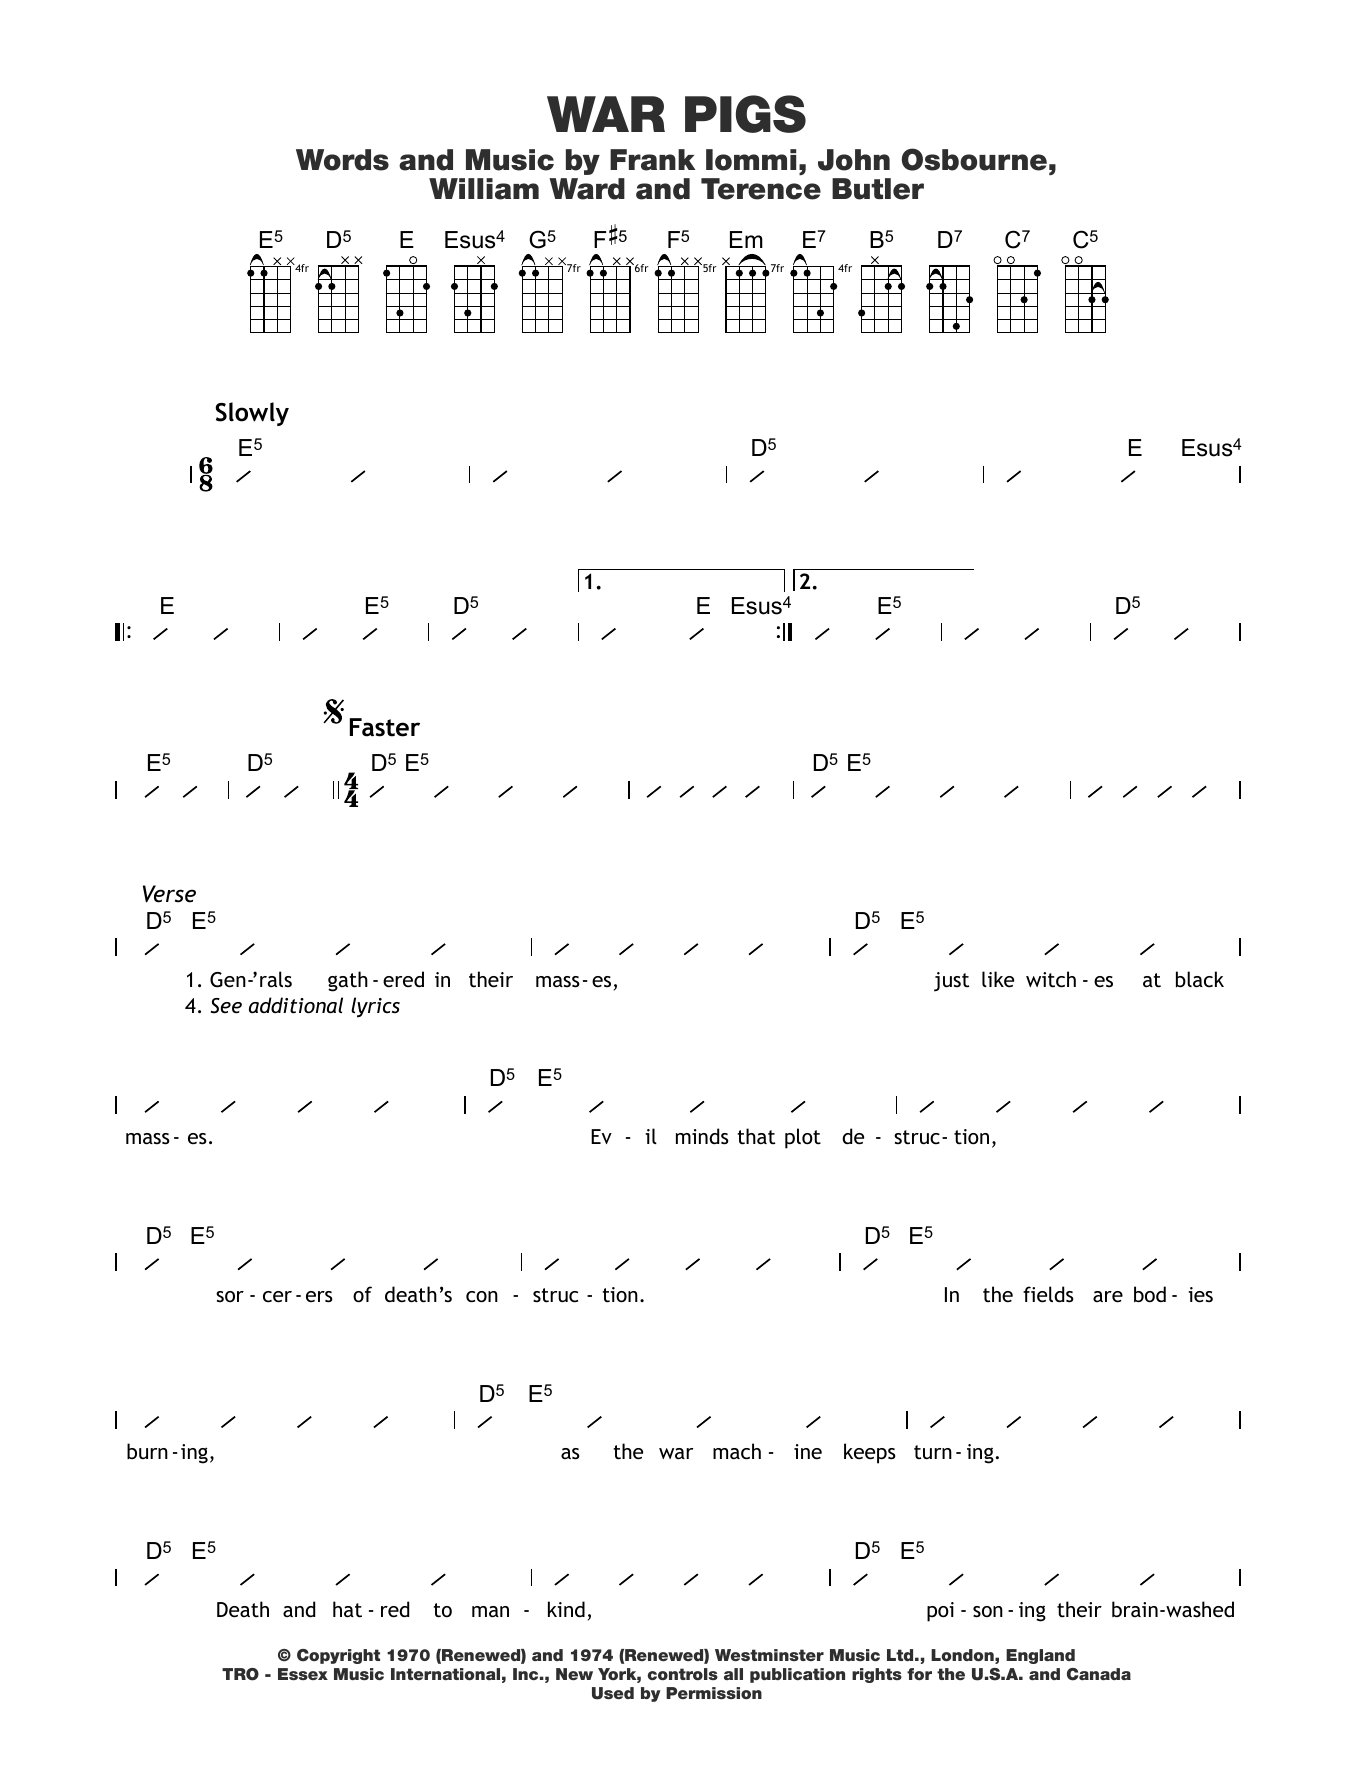 Black Sabbath War Pigs Sheet Music Notes & Chords for Ukulele with strumming patterns - Download or Print PDF